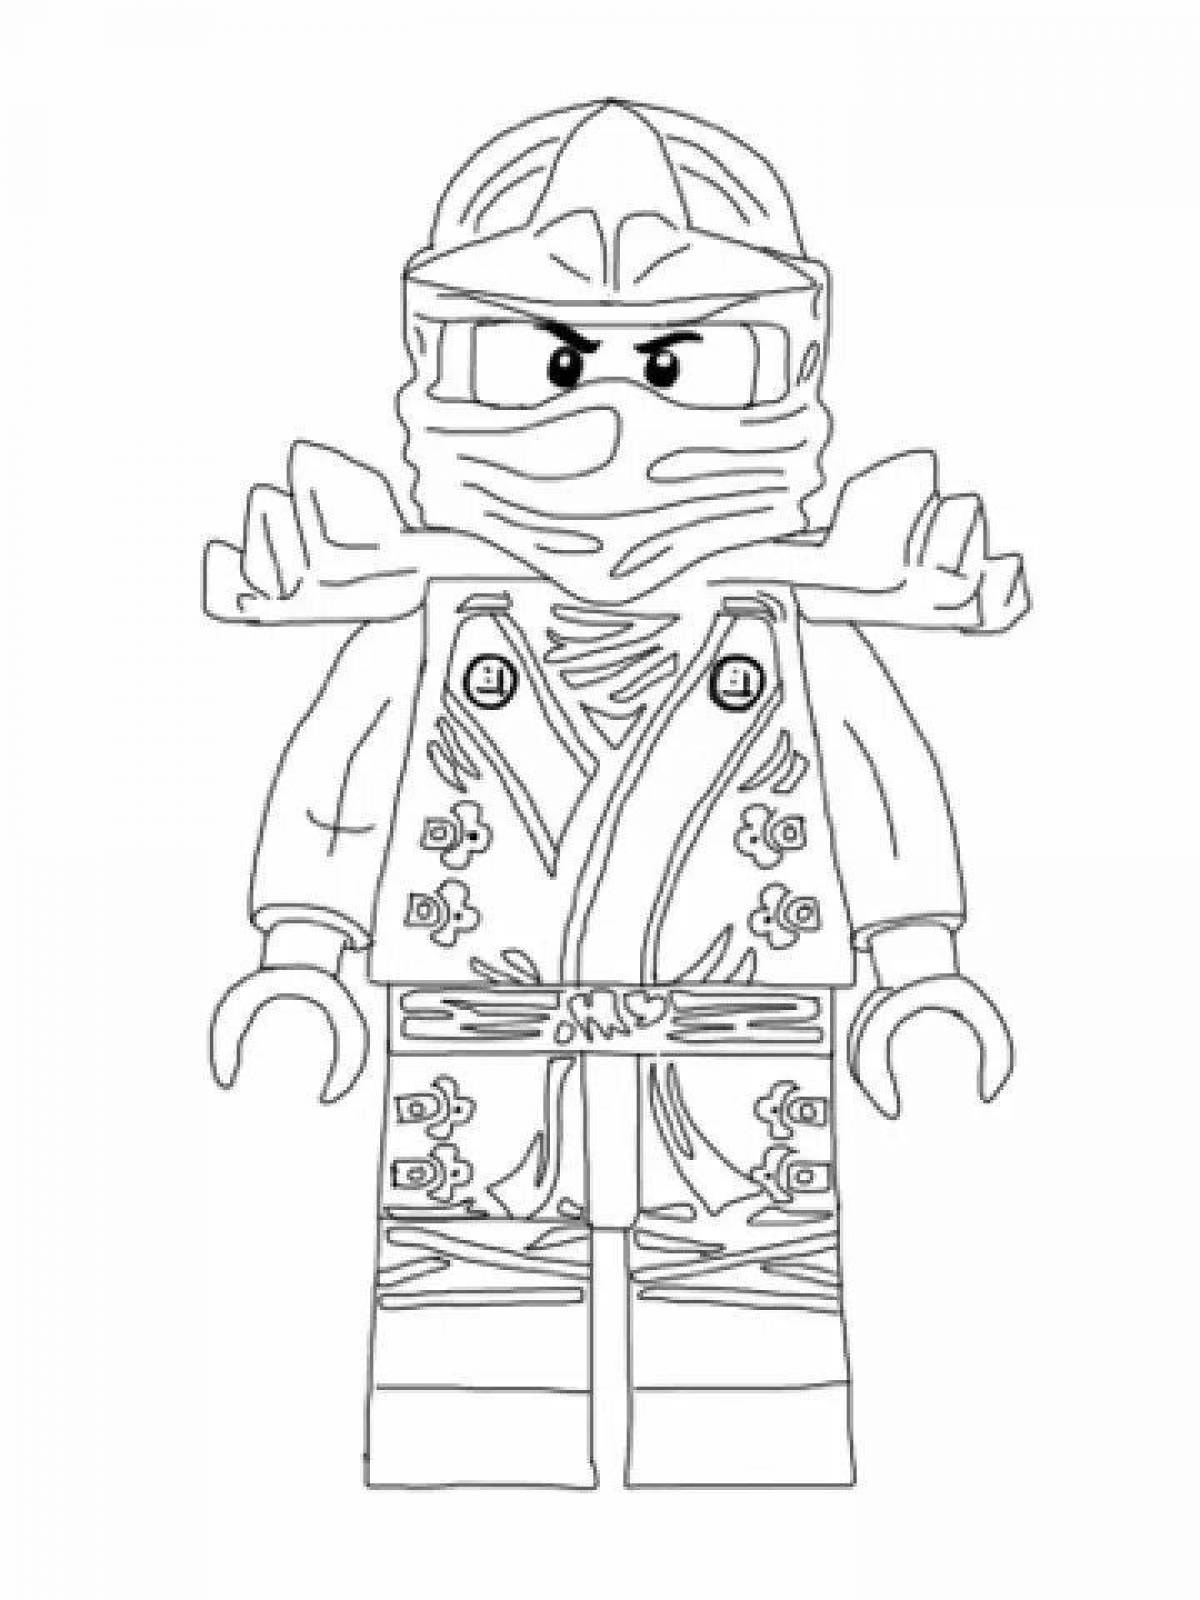 Joyful lego ninjago lloyd coloring page